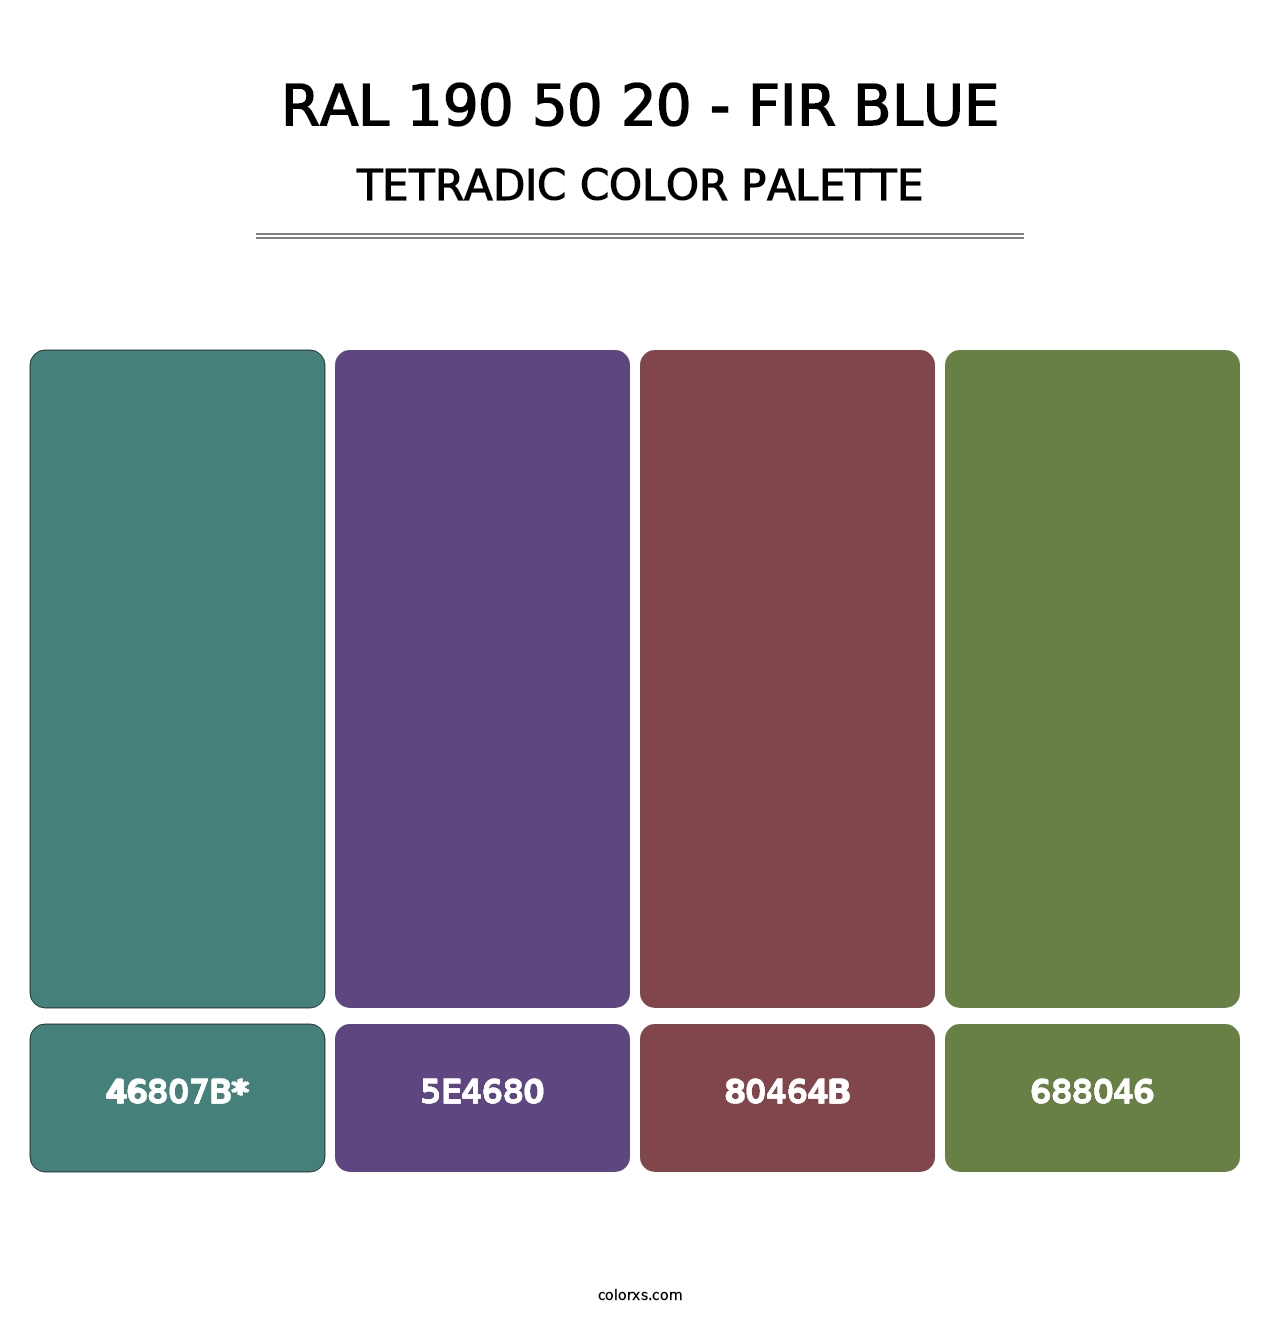 RAL 190 50 20 - Fir Blue - Tetradic Color Palette